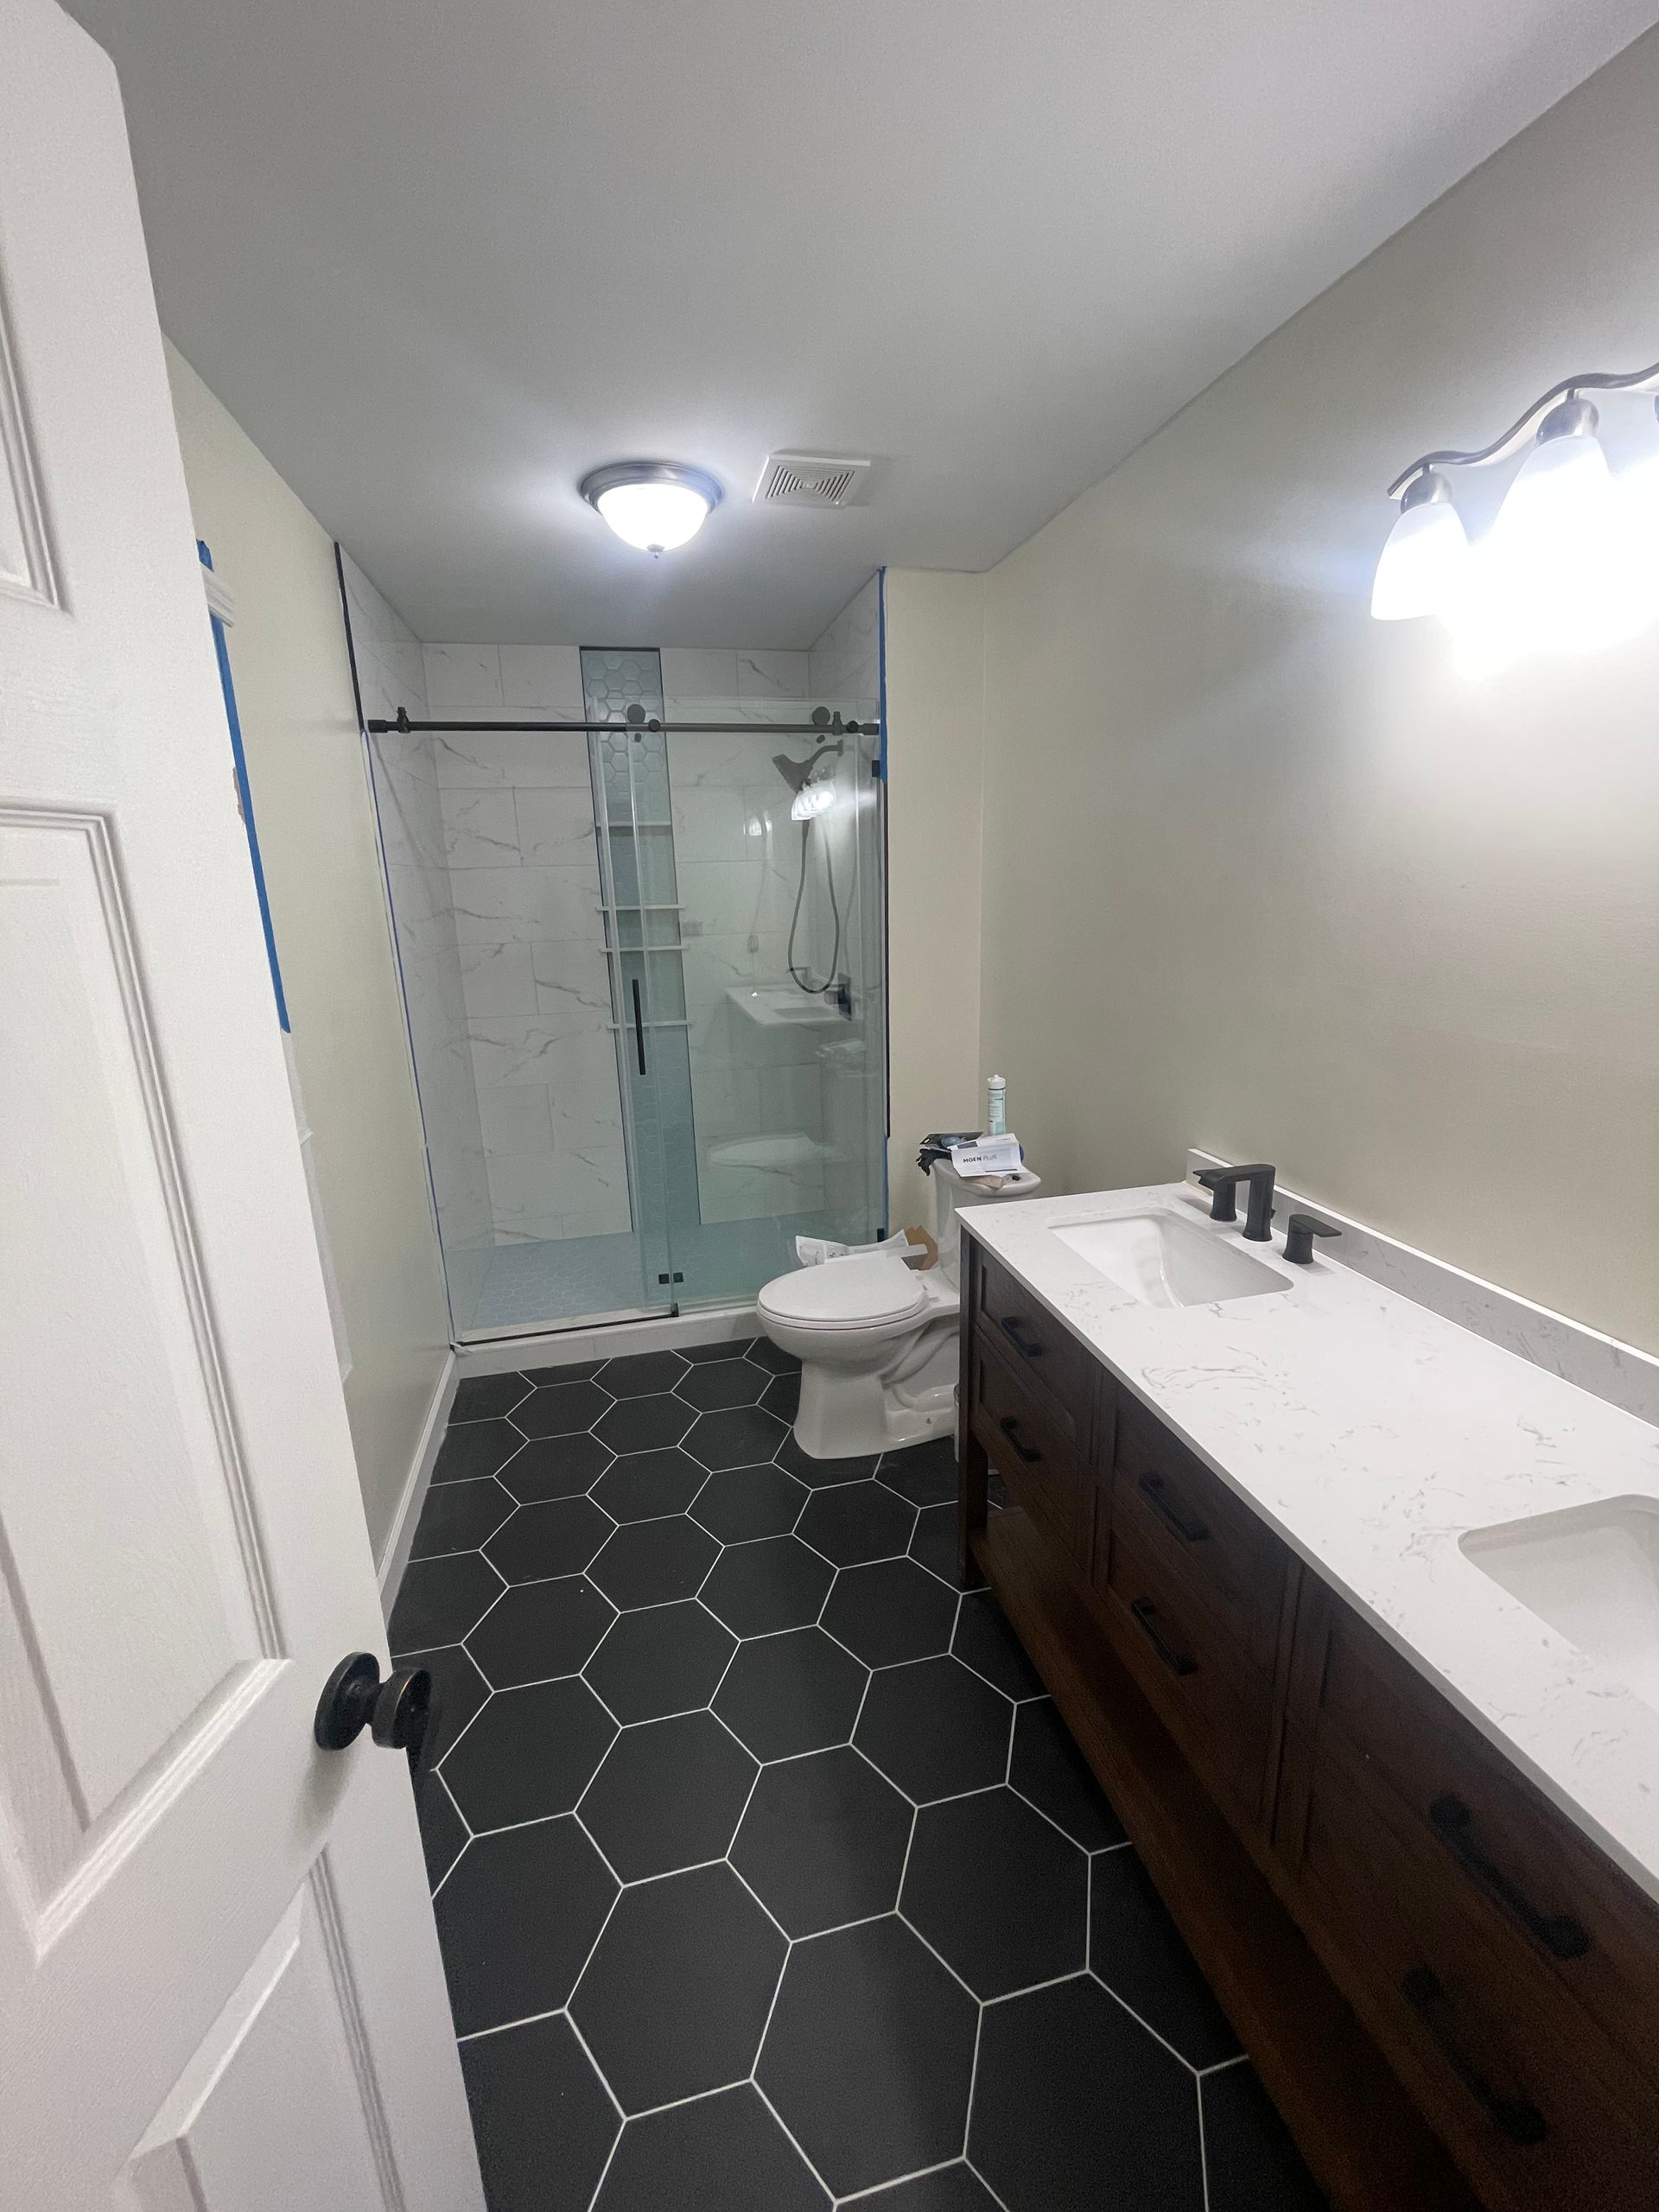 bathroom tiling, grout application, bathroom remodeling contractors in midlothian virginia, bath remodel midlothian va